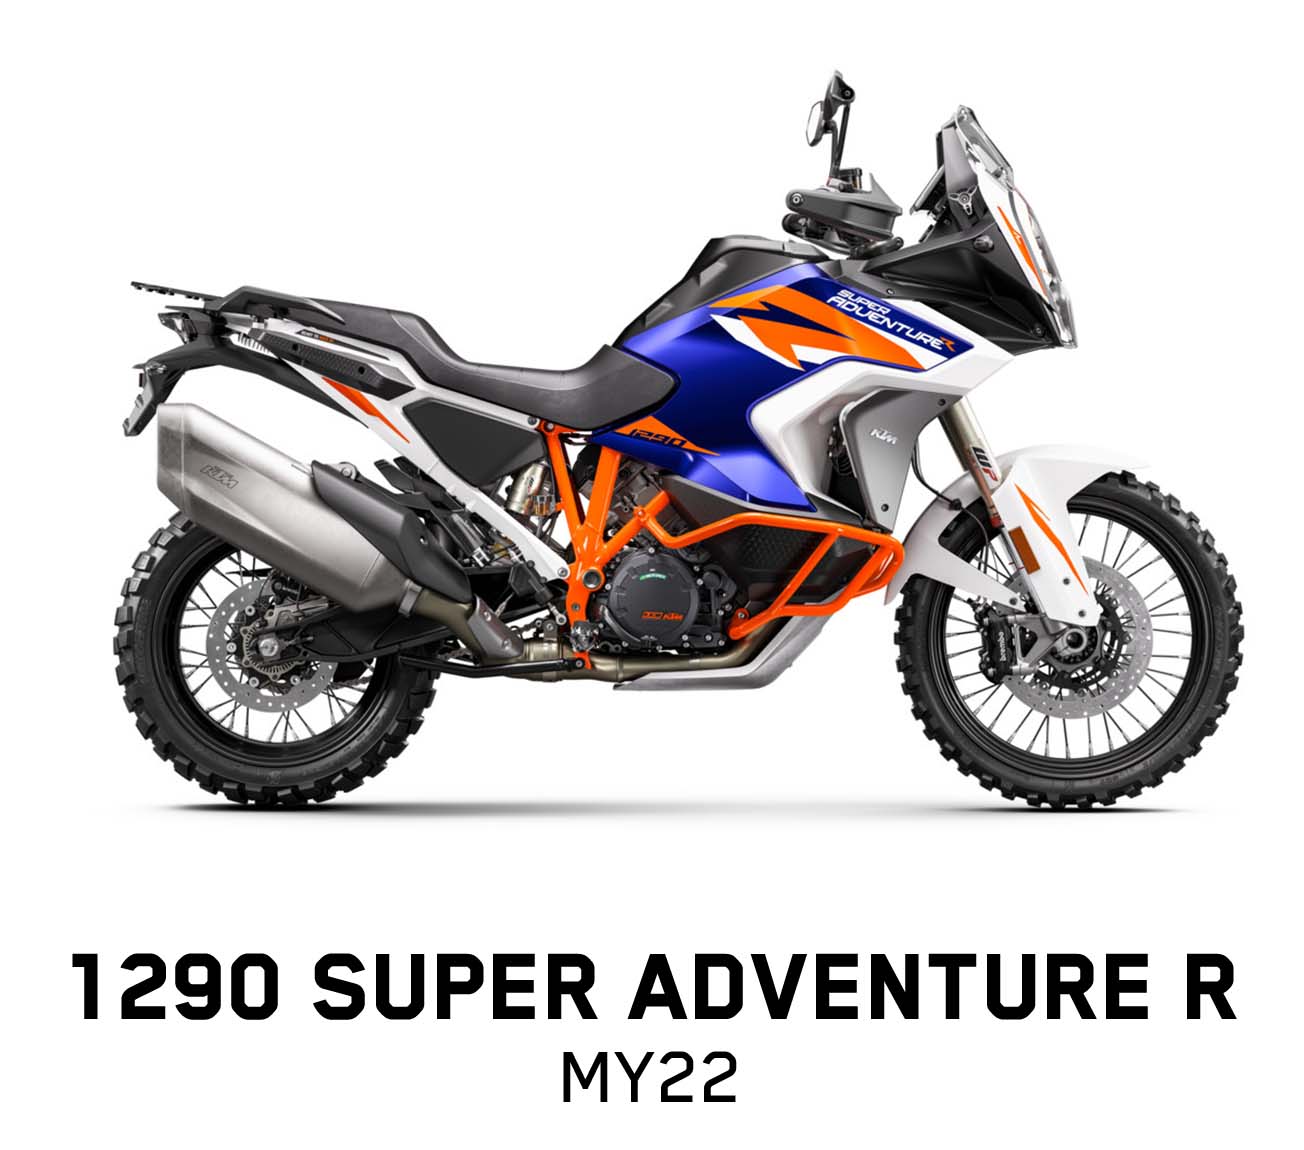 Laguna Exclusive KTM Tech Pack Offers 1290 Super Adventure R